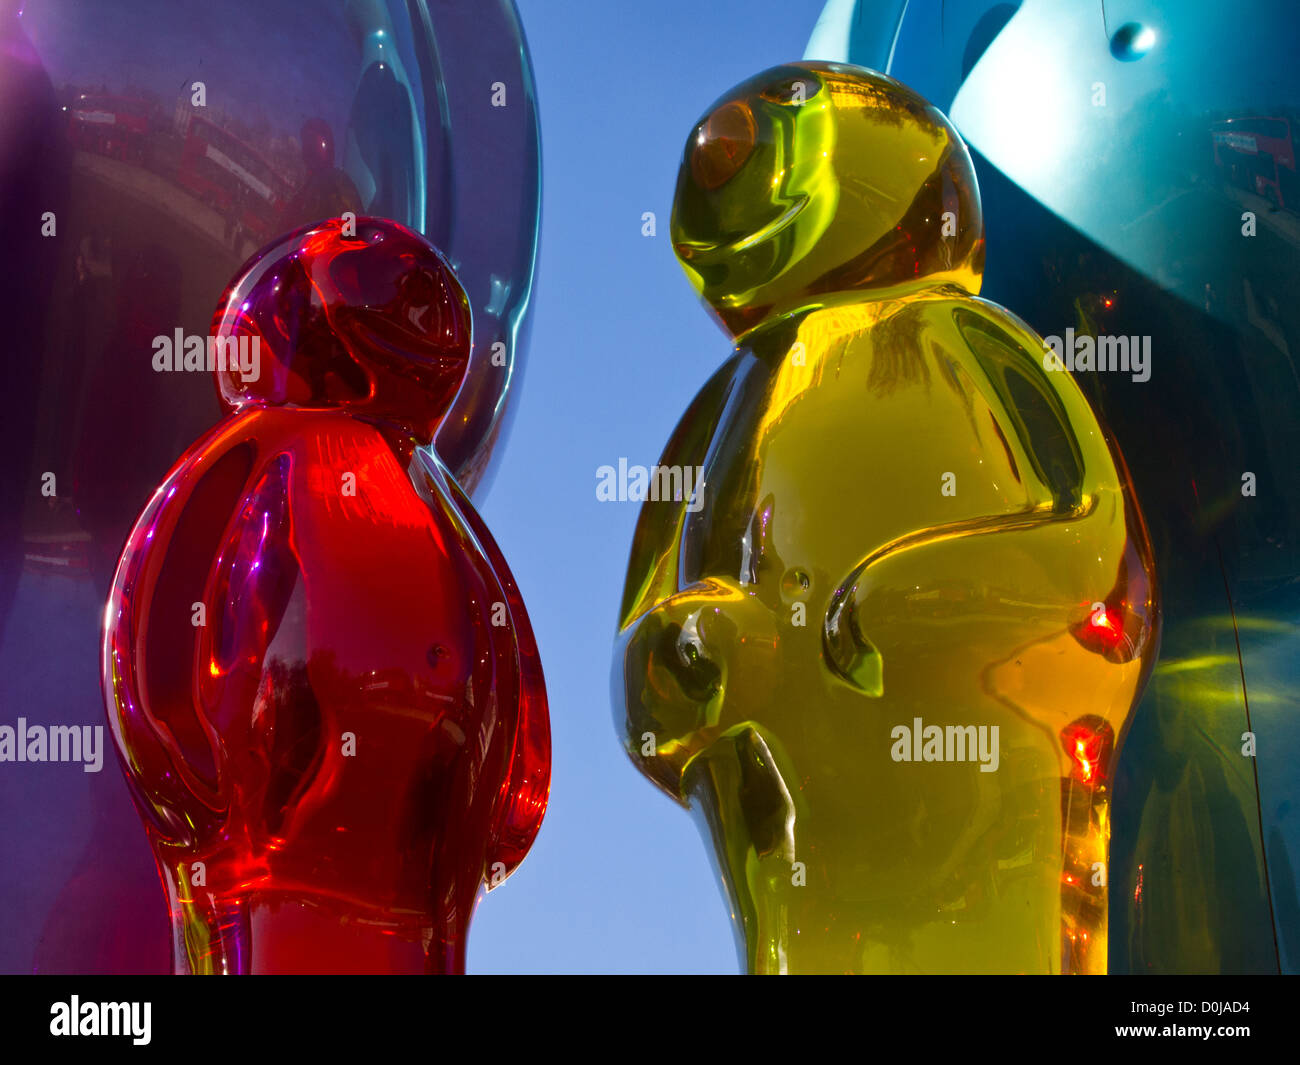 The Jelly Baby sculpture created by Italian pop artist Mauro Perucchetti. Stock Photo